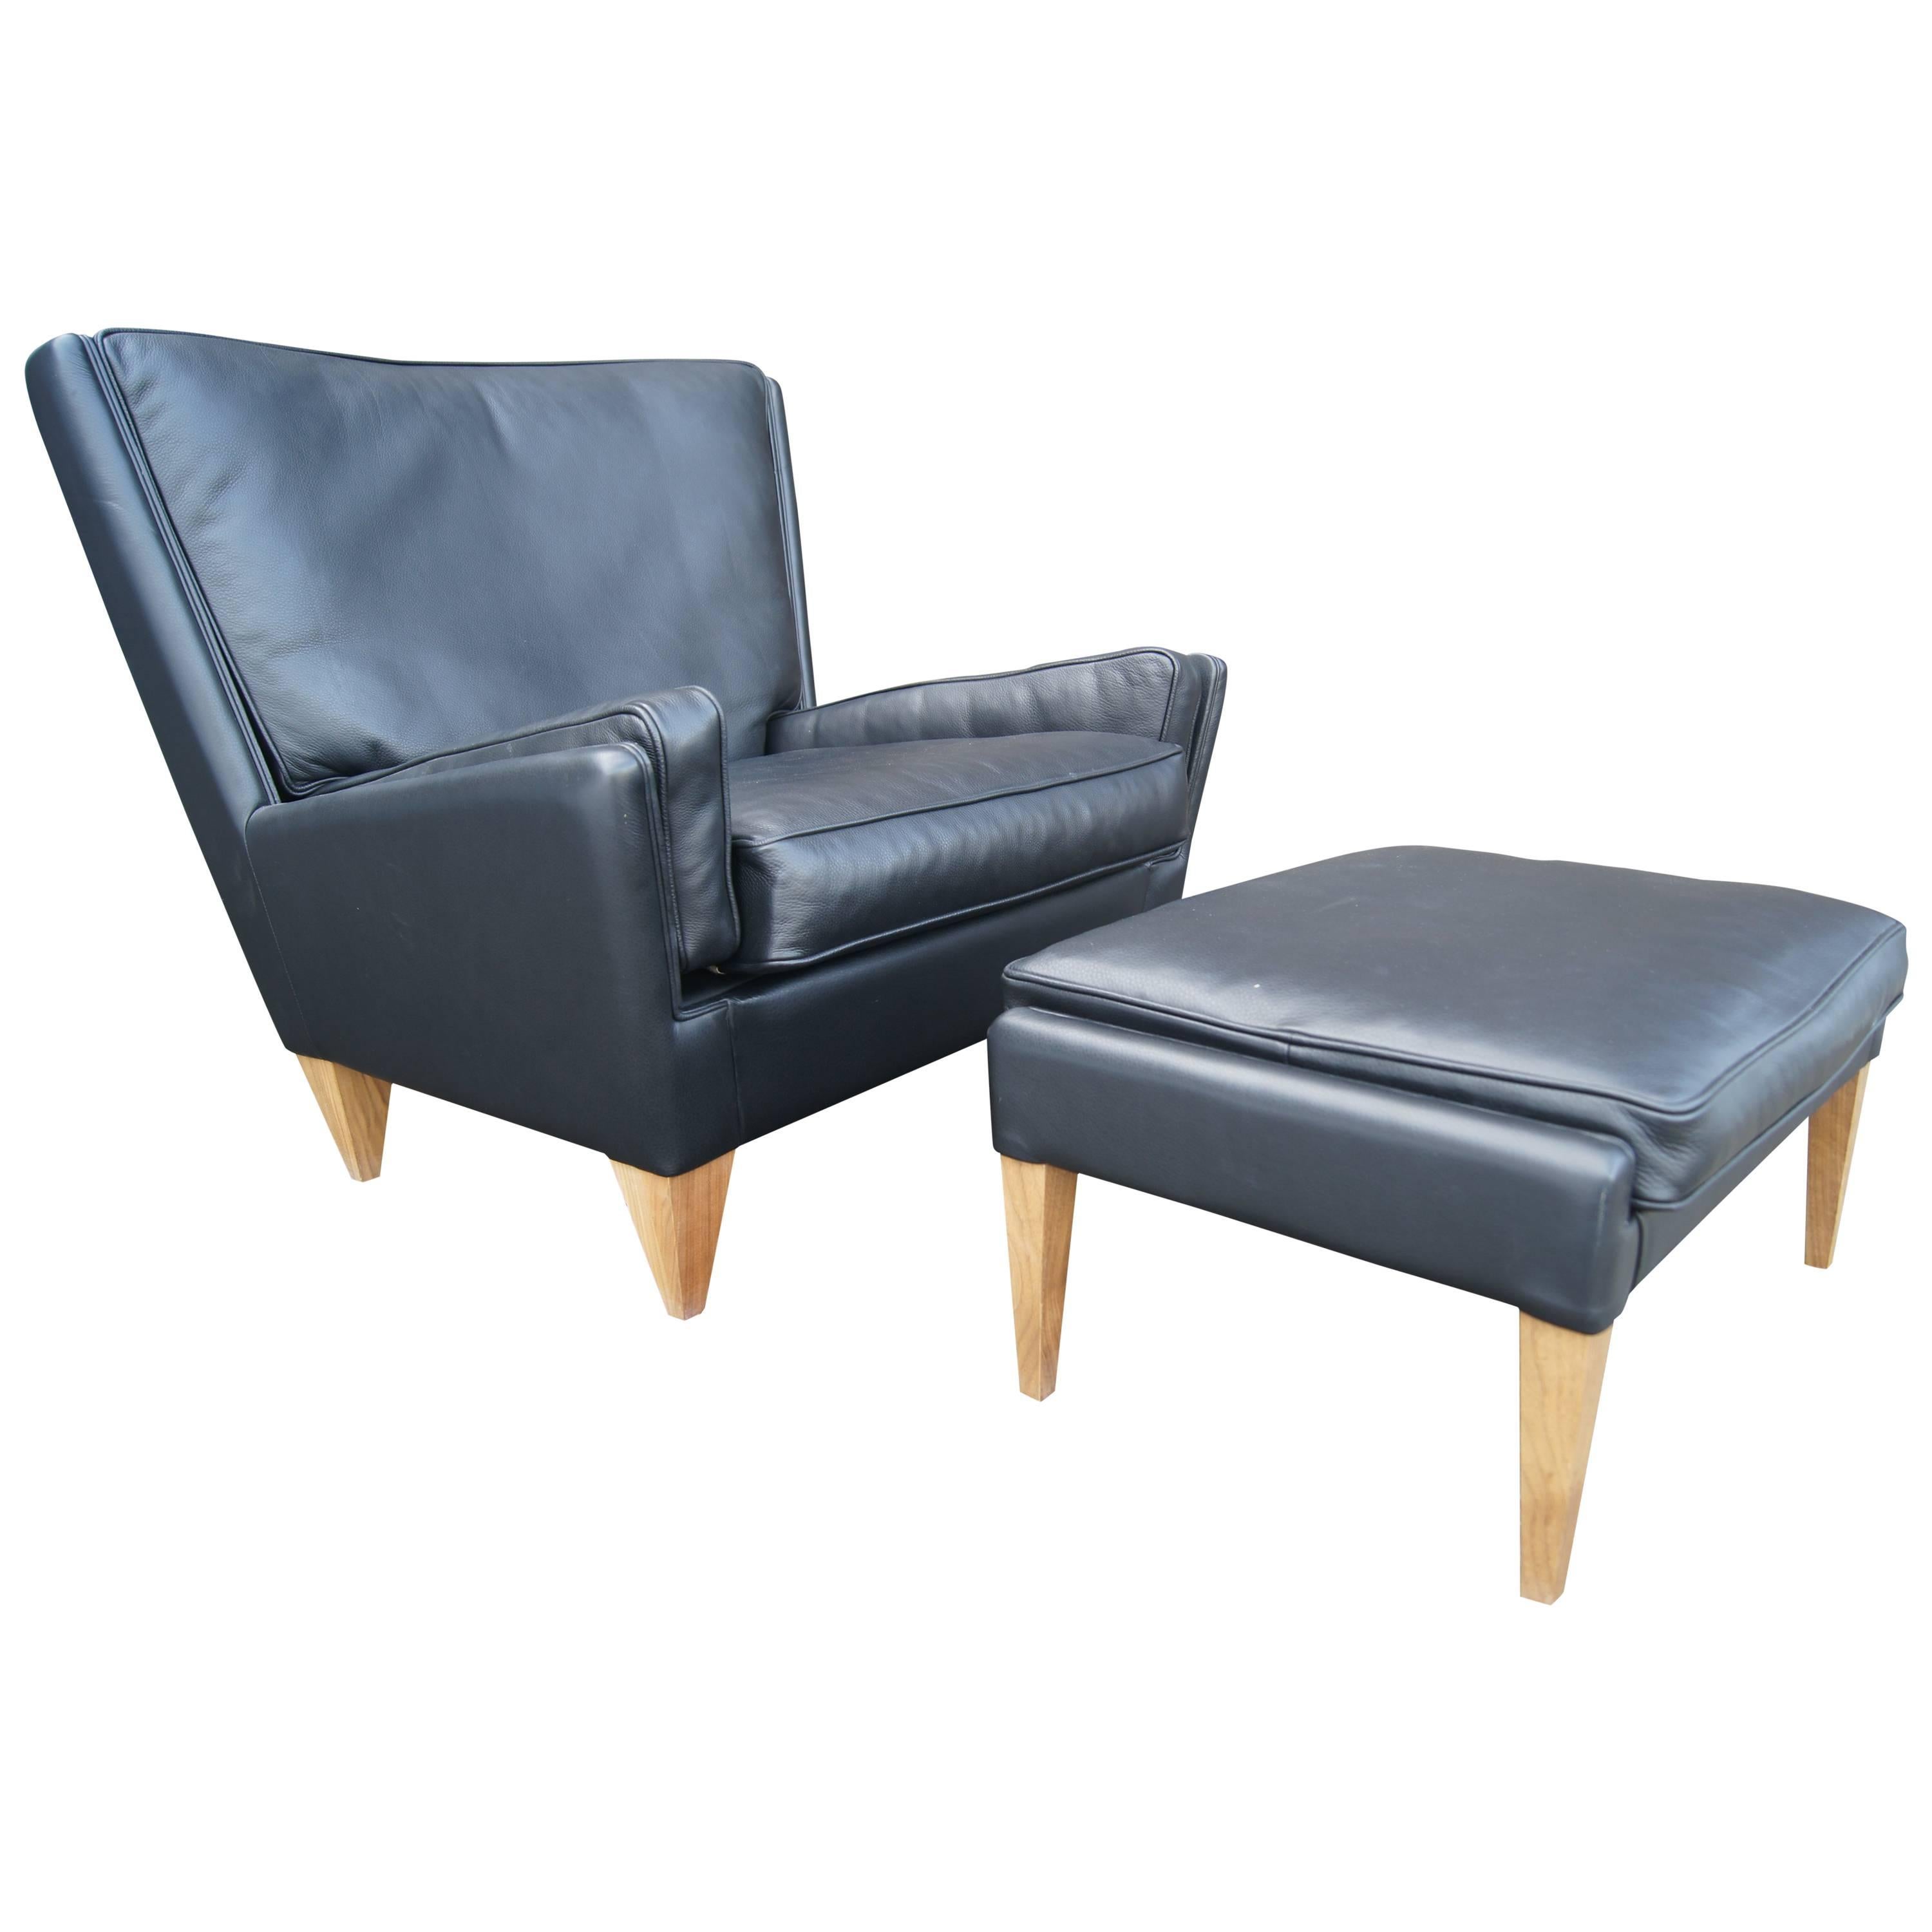 Black Leather Lounge Chair and Ottoman, Model V11, by Illum Wikkelsø